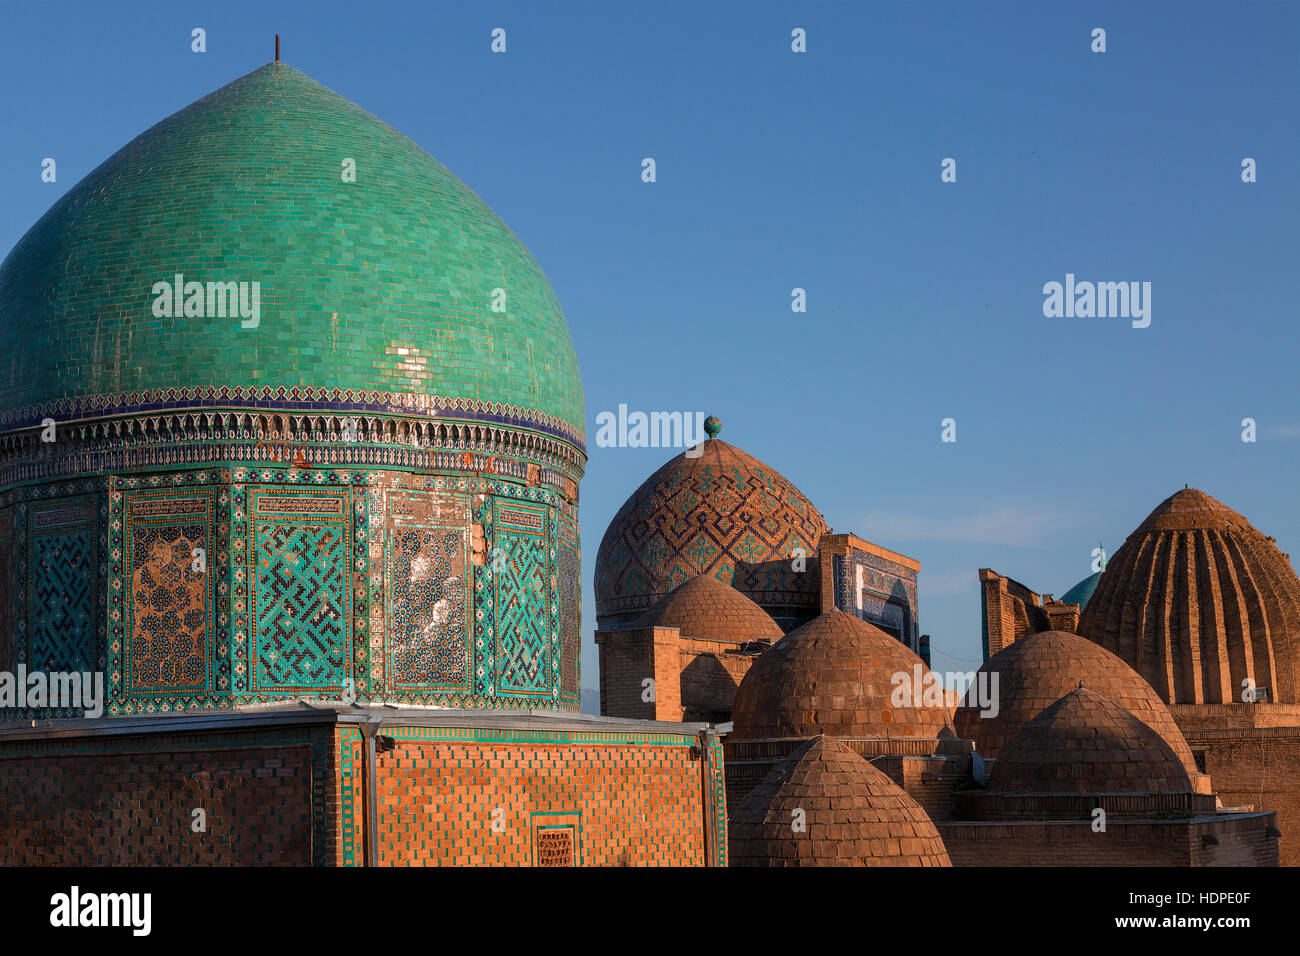 Shah i Zinda Mausoleum Complex and its domes, Samarkand, Uzbekistan. Stock Photo